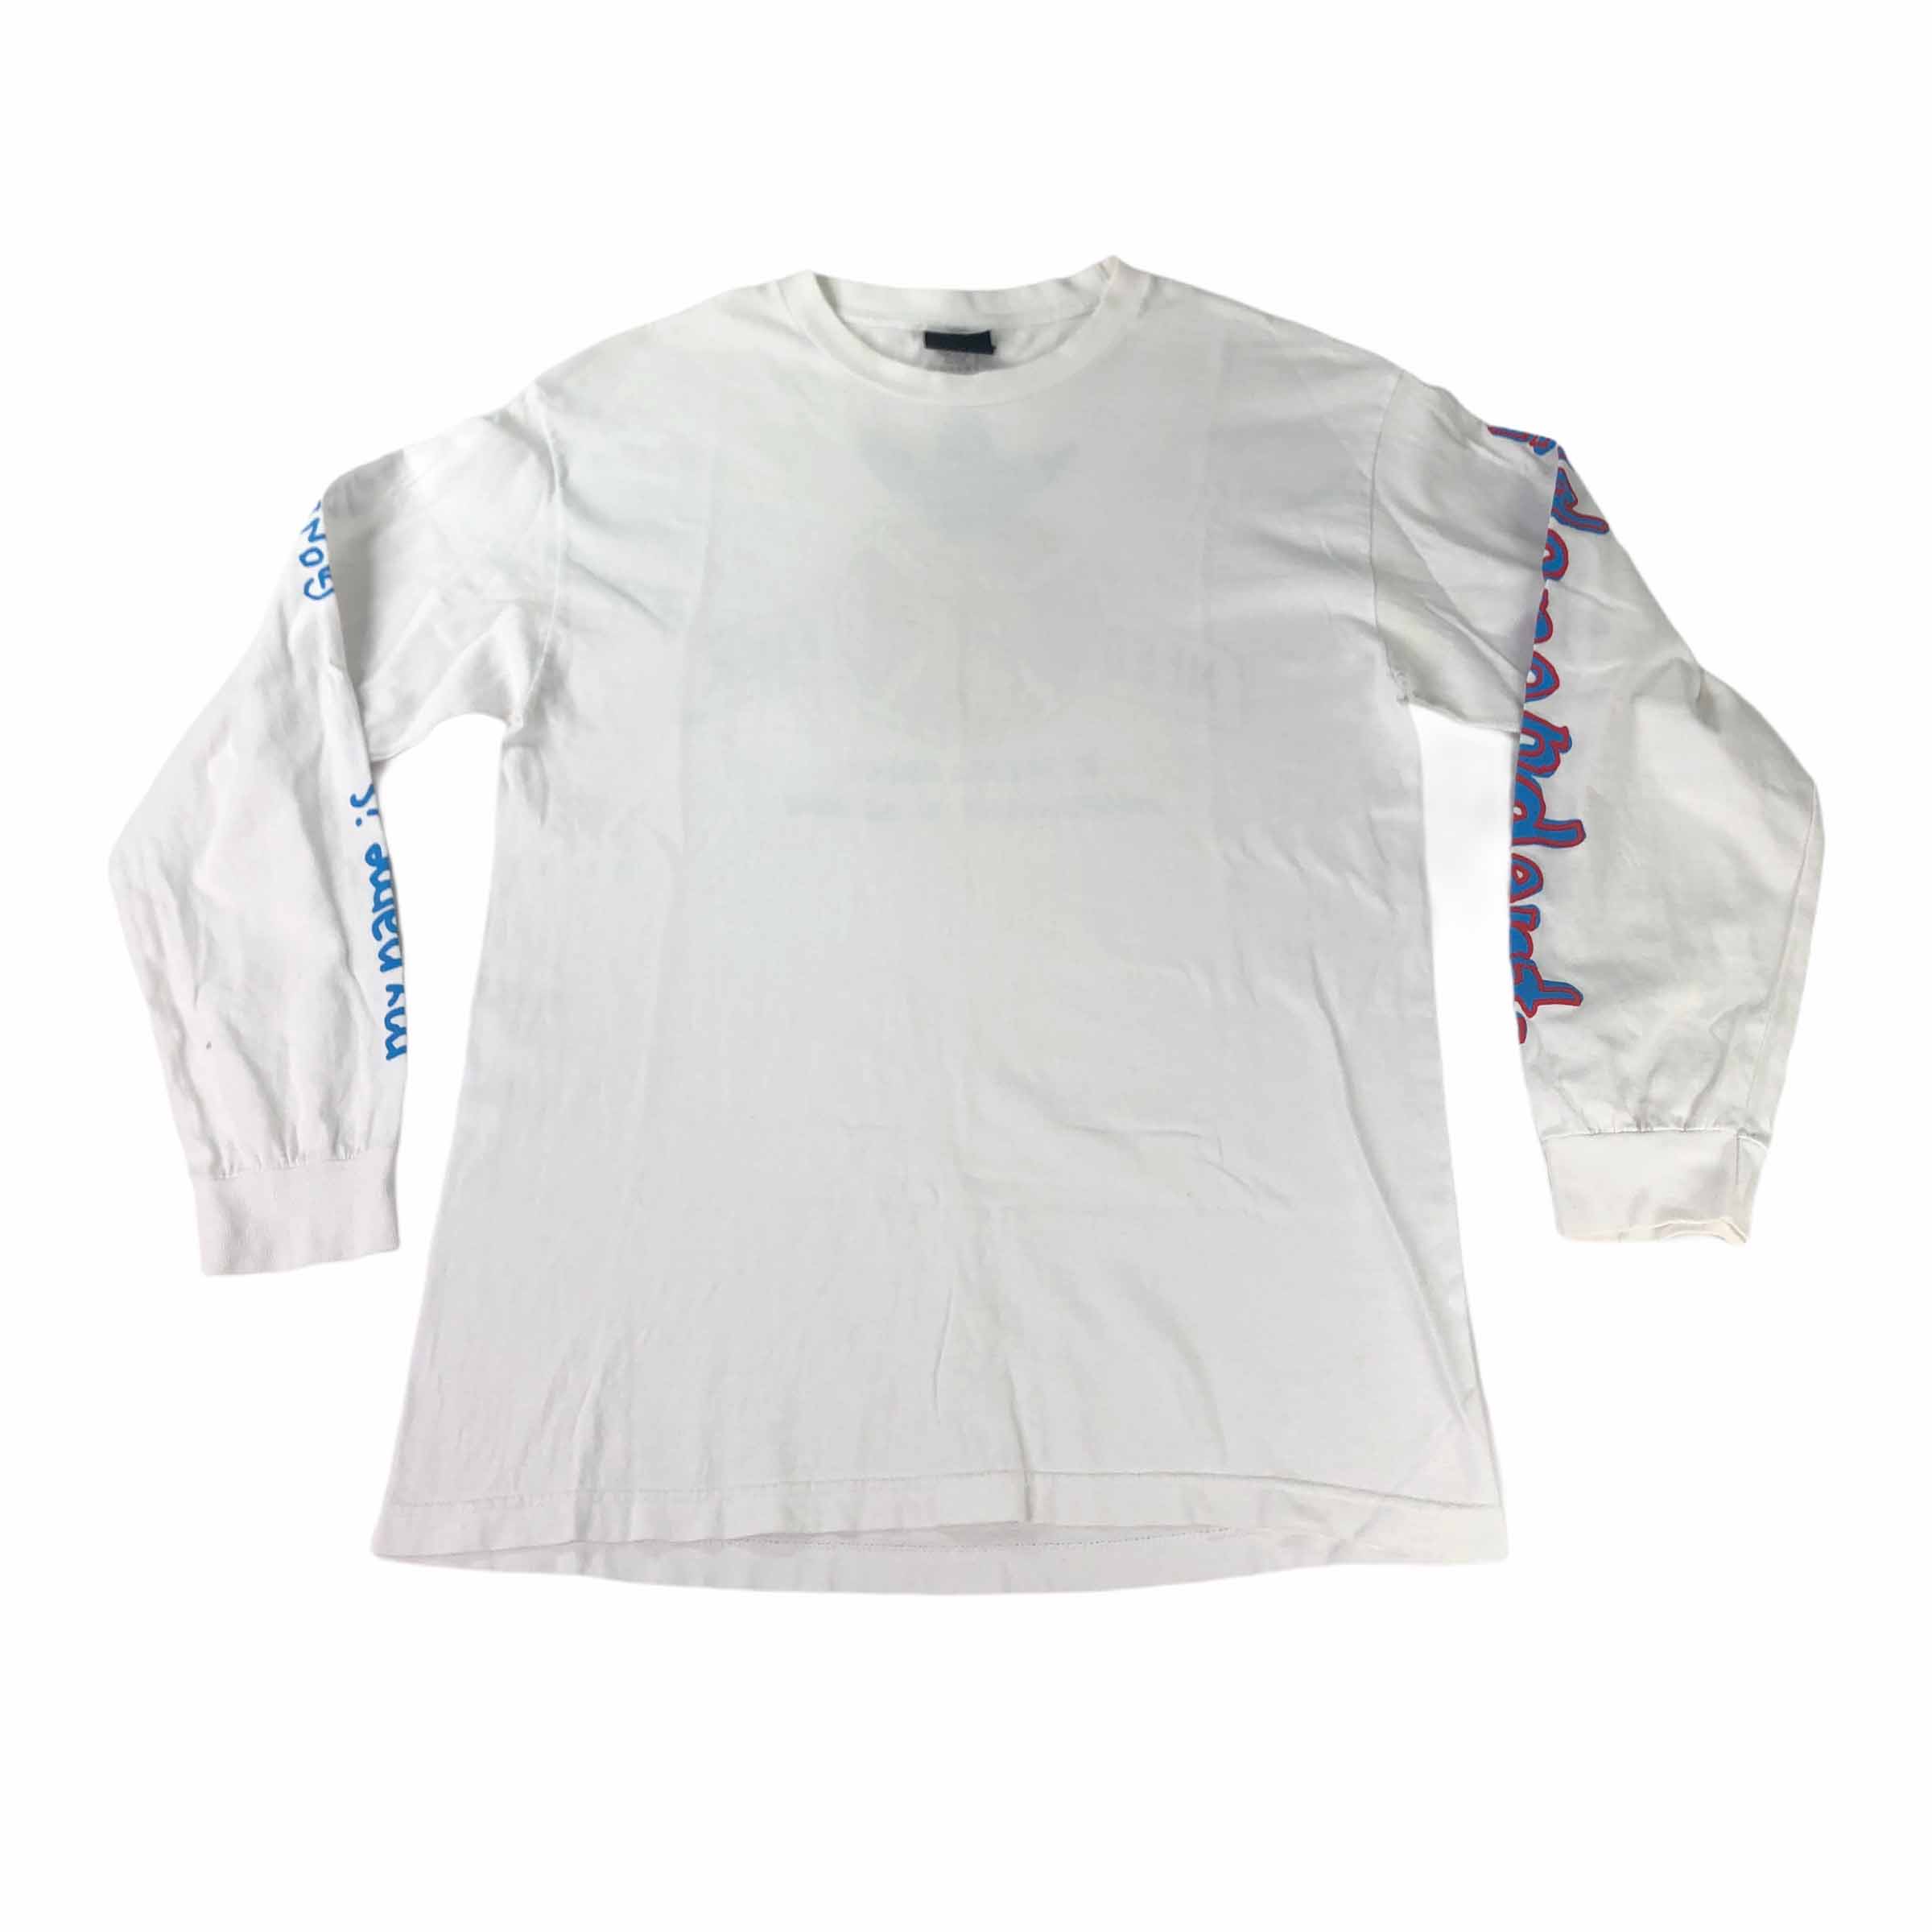 [NHS x Mark Gonz] Long Sleeve Tshirt WH - Size L